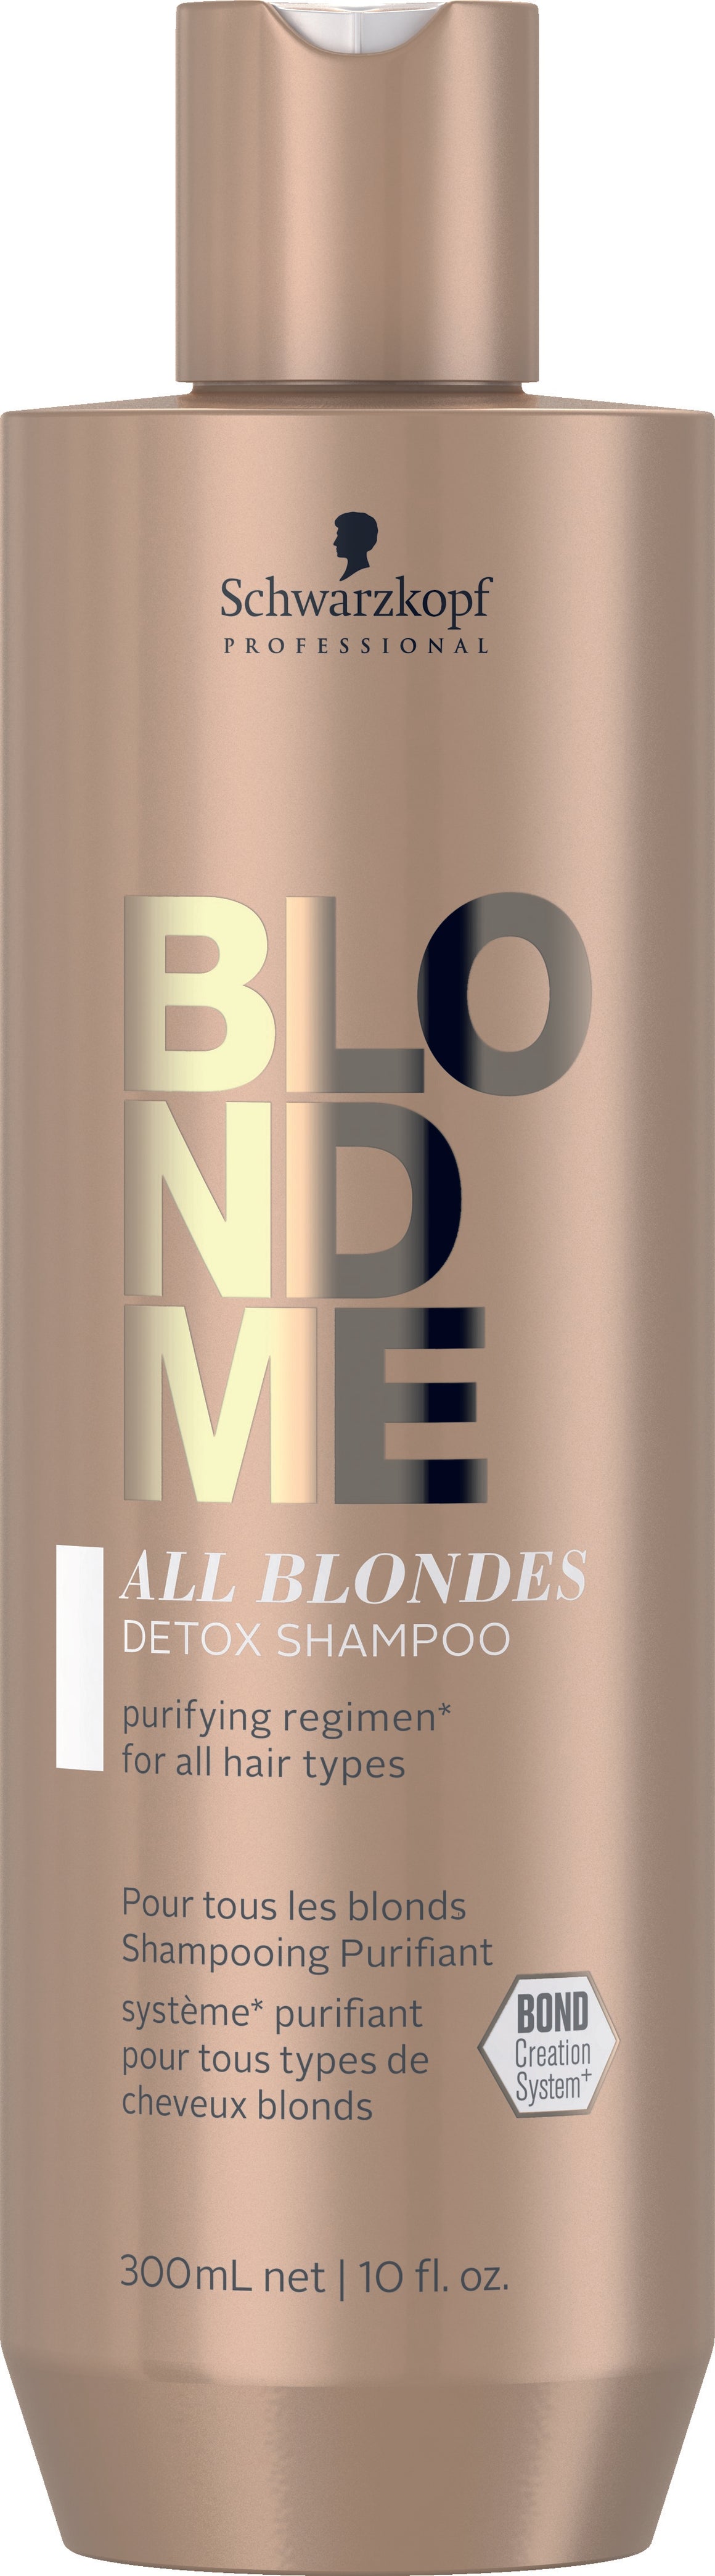 Schwarzkopf Professional BlondMe All Blondes Detox Shampoo at Eds Hair Bramhall